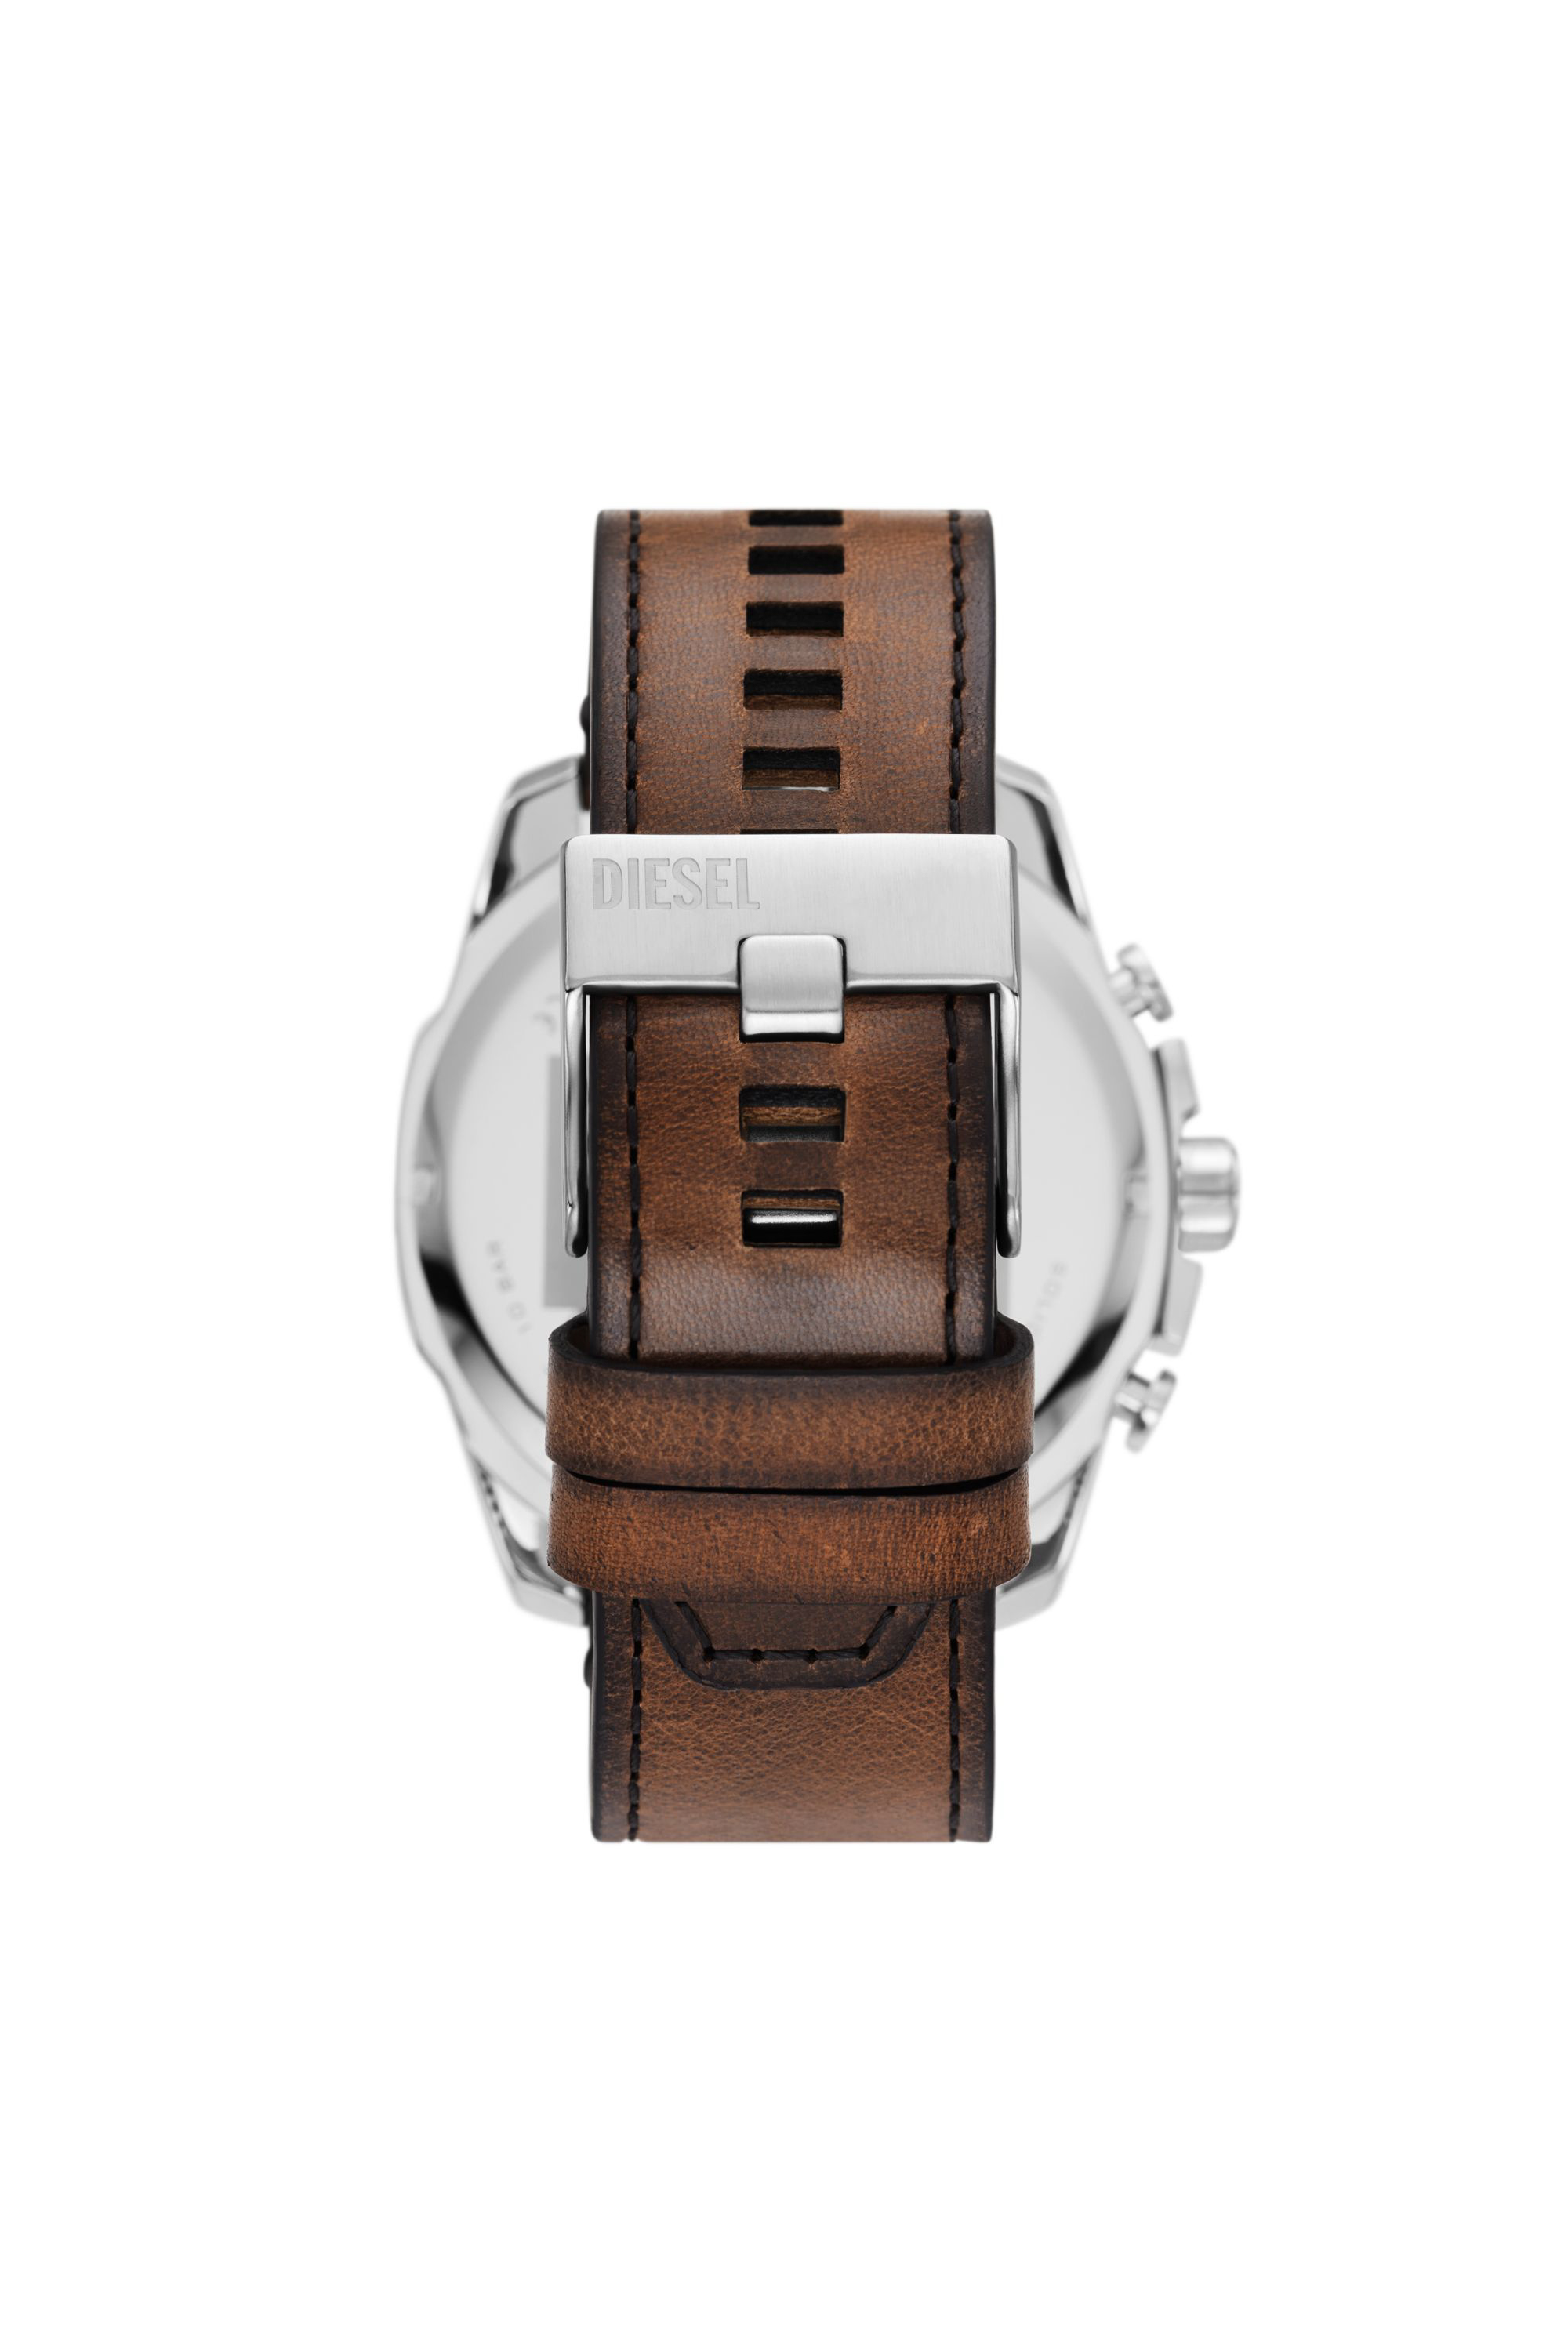 Diesel - DZ4657, Man Mega Chief chronograph brown leather watch in Brown - Image 2